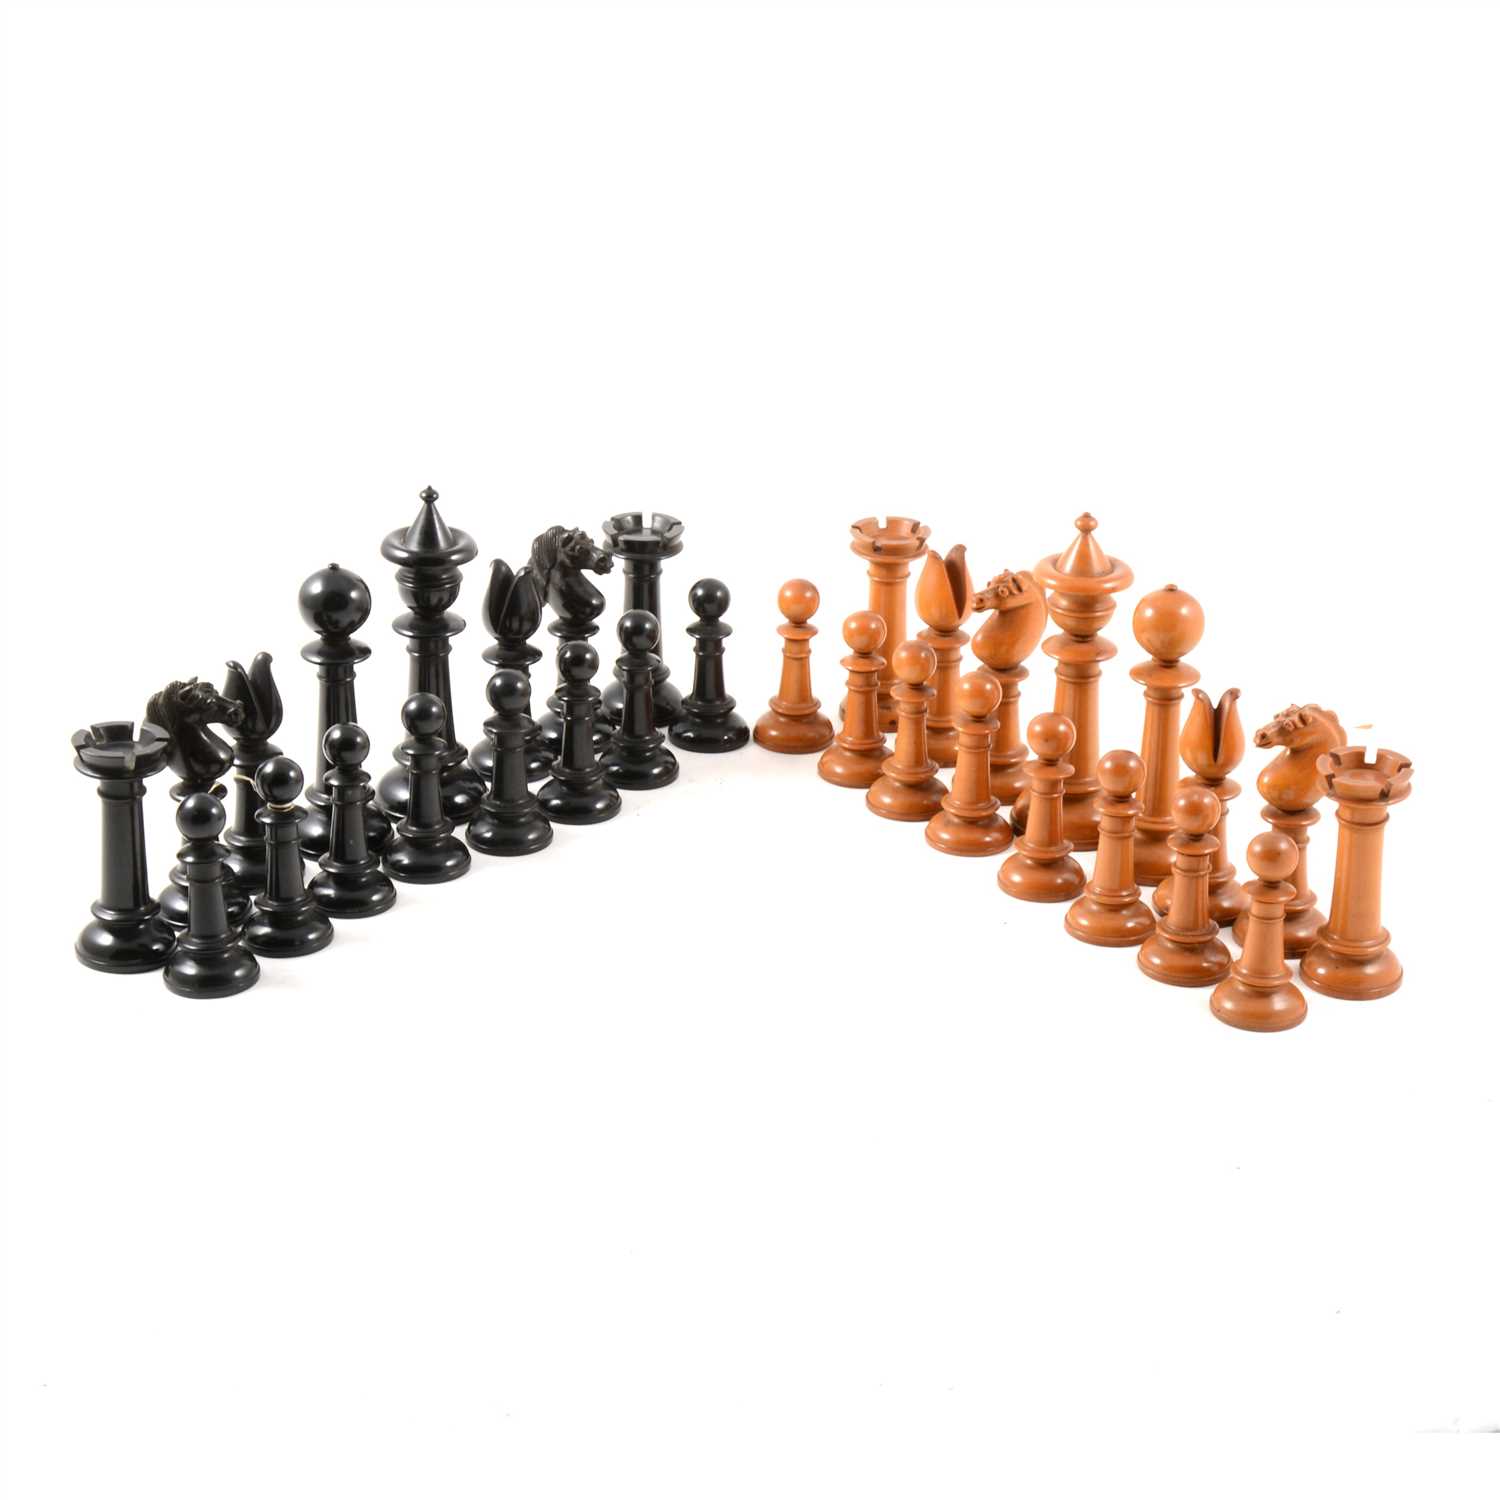 363 - Staunton pattern boxwood and ebony chess set, W Leuchars, Piccadilly, London